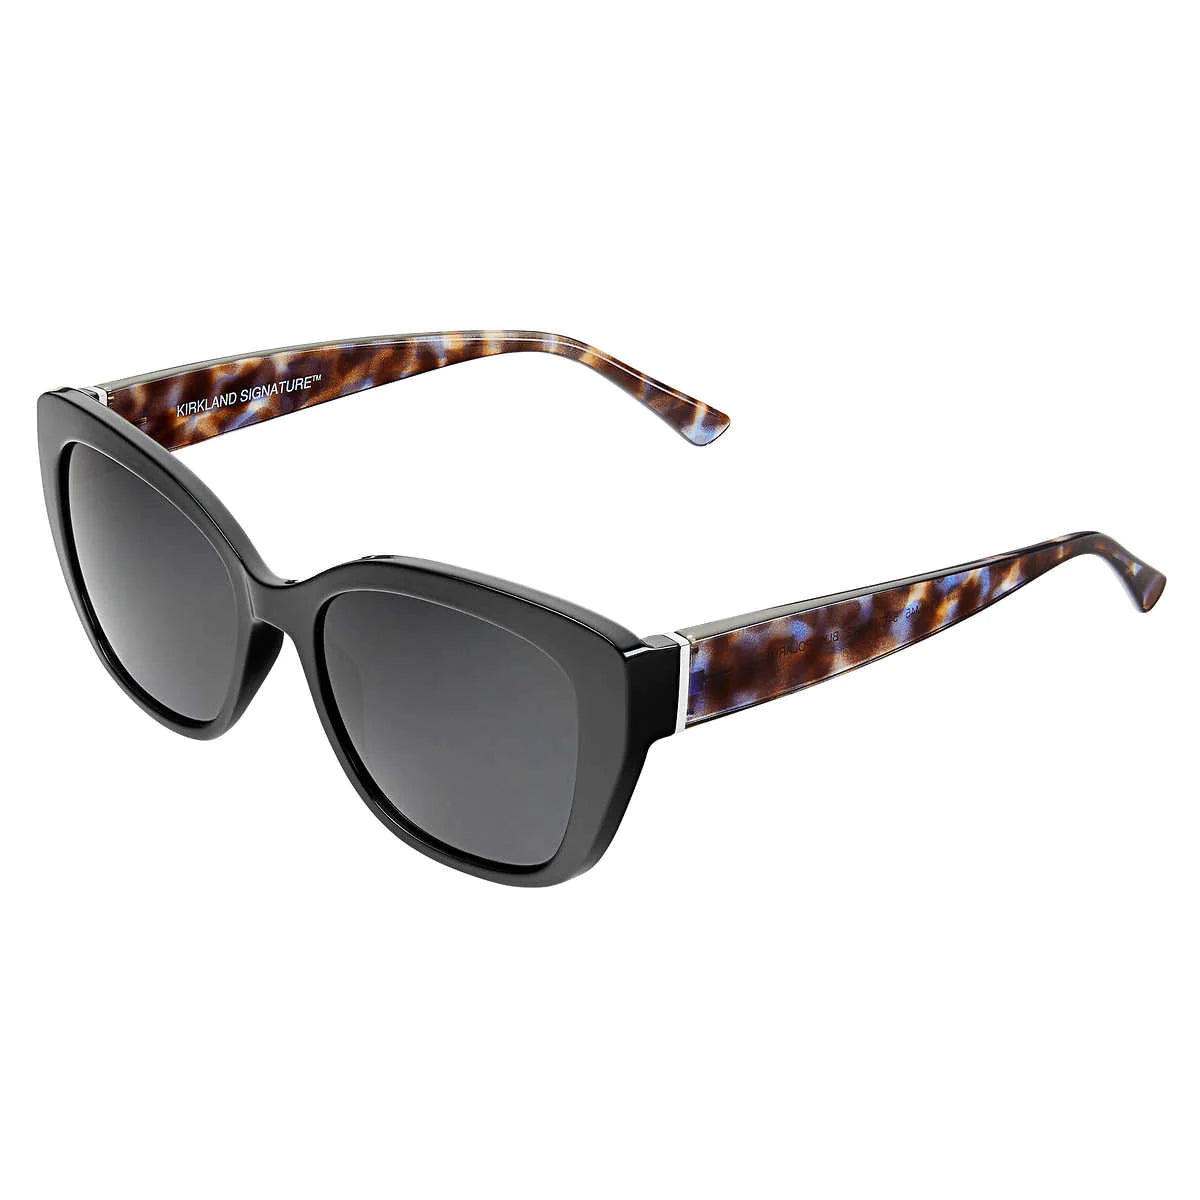 kirkland-signature-lunettes-soleil-femme-sunglasses-3